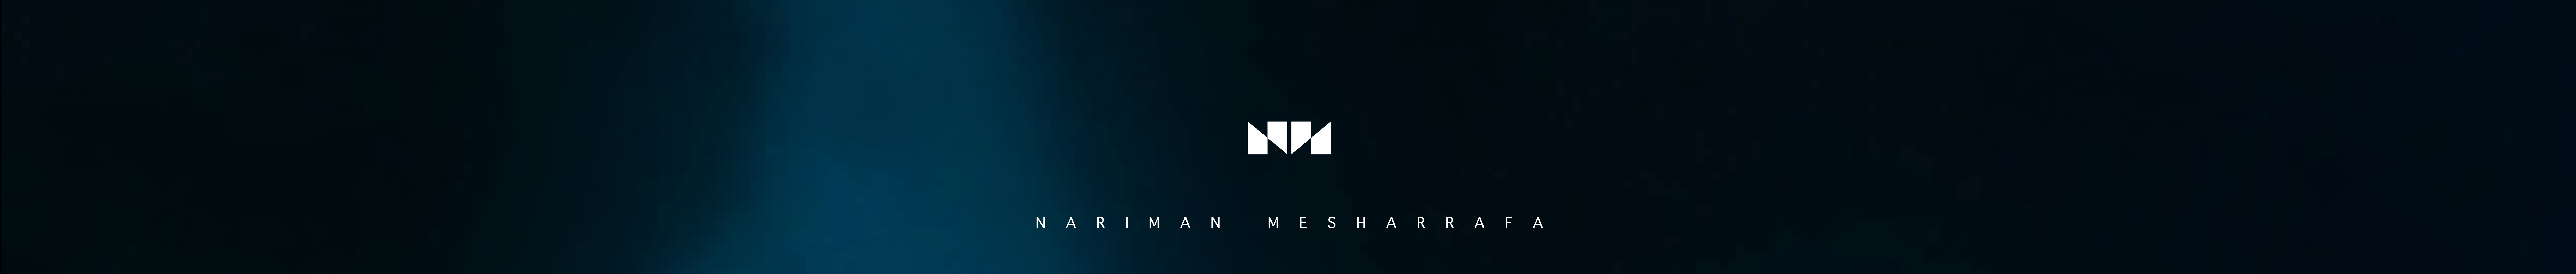 Nariman Mesharrafa's profile banner